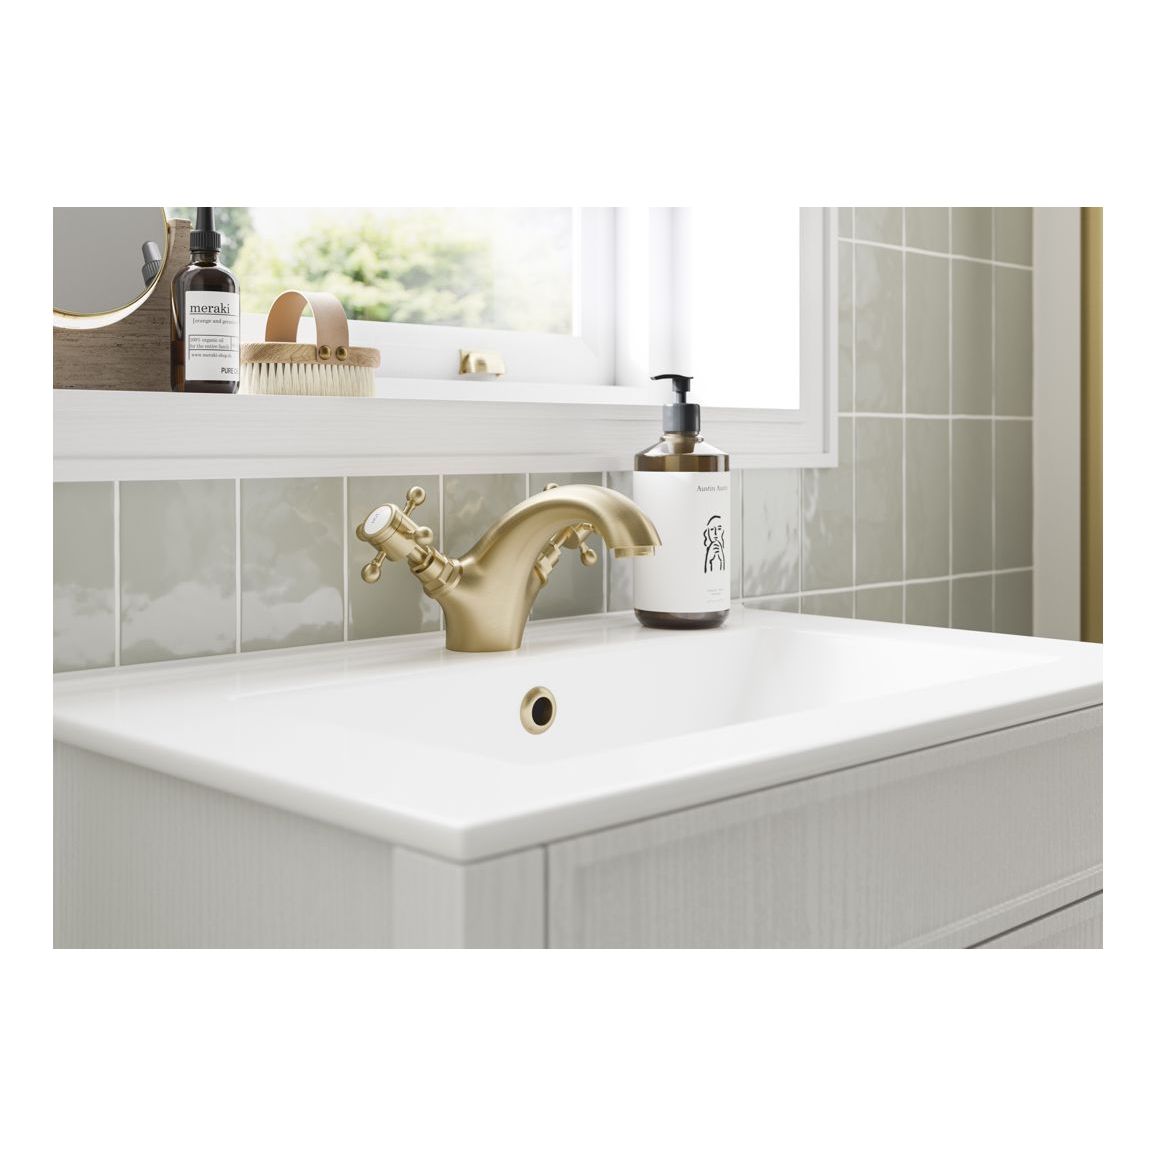 Namdi Bath/Shower Mixer & Shower Kit - Brushed Brass